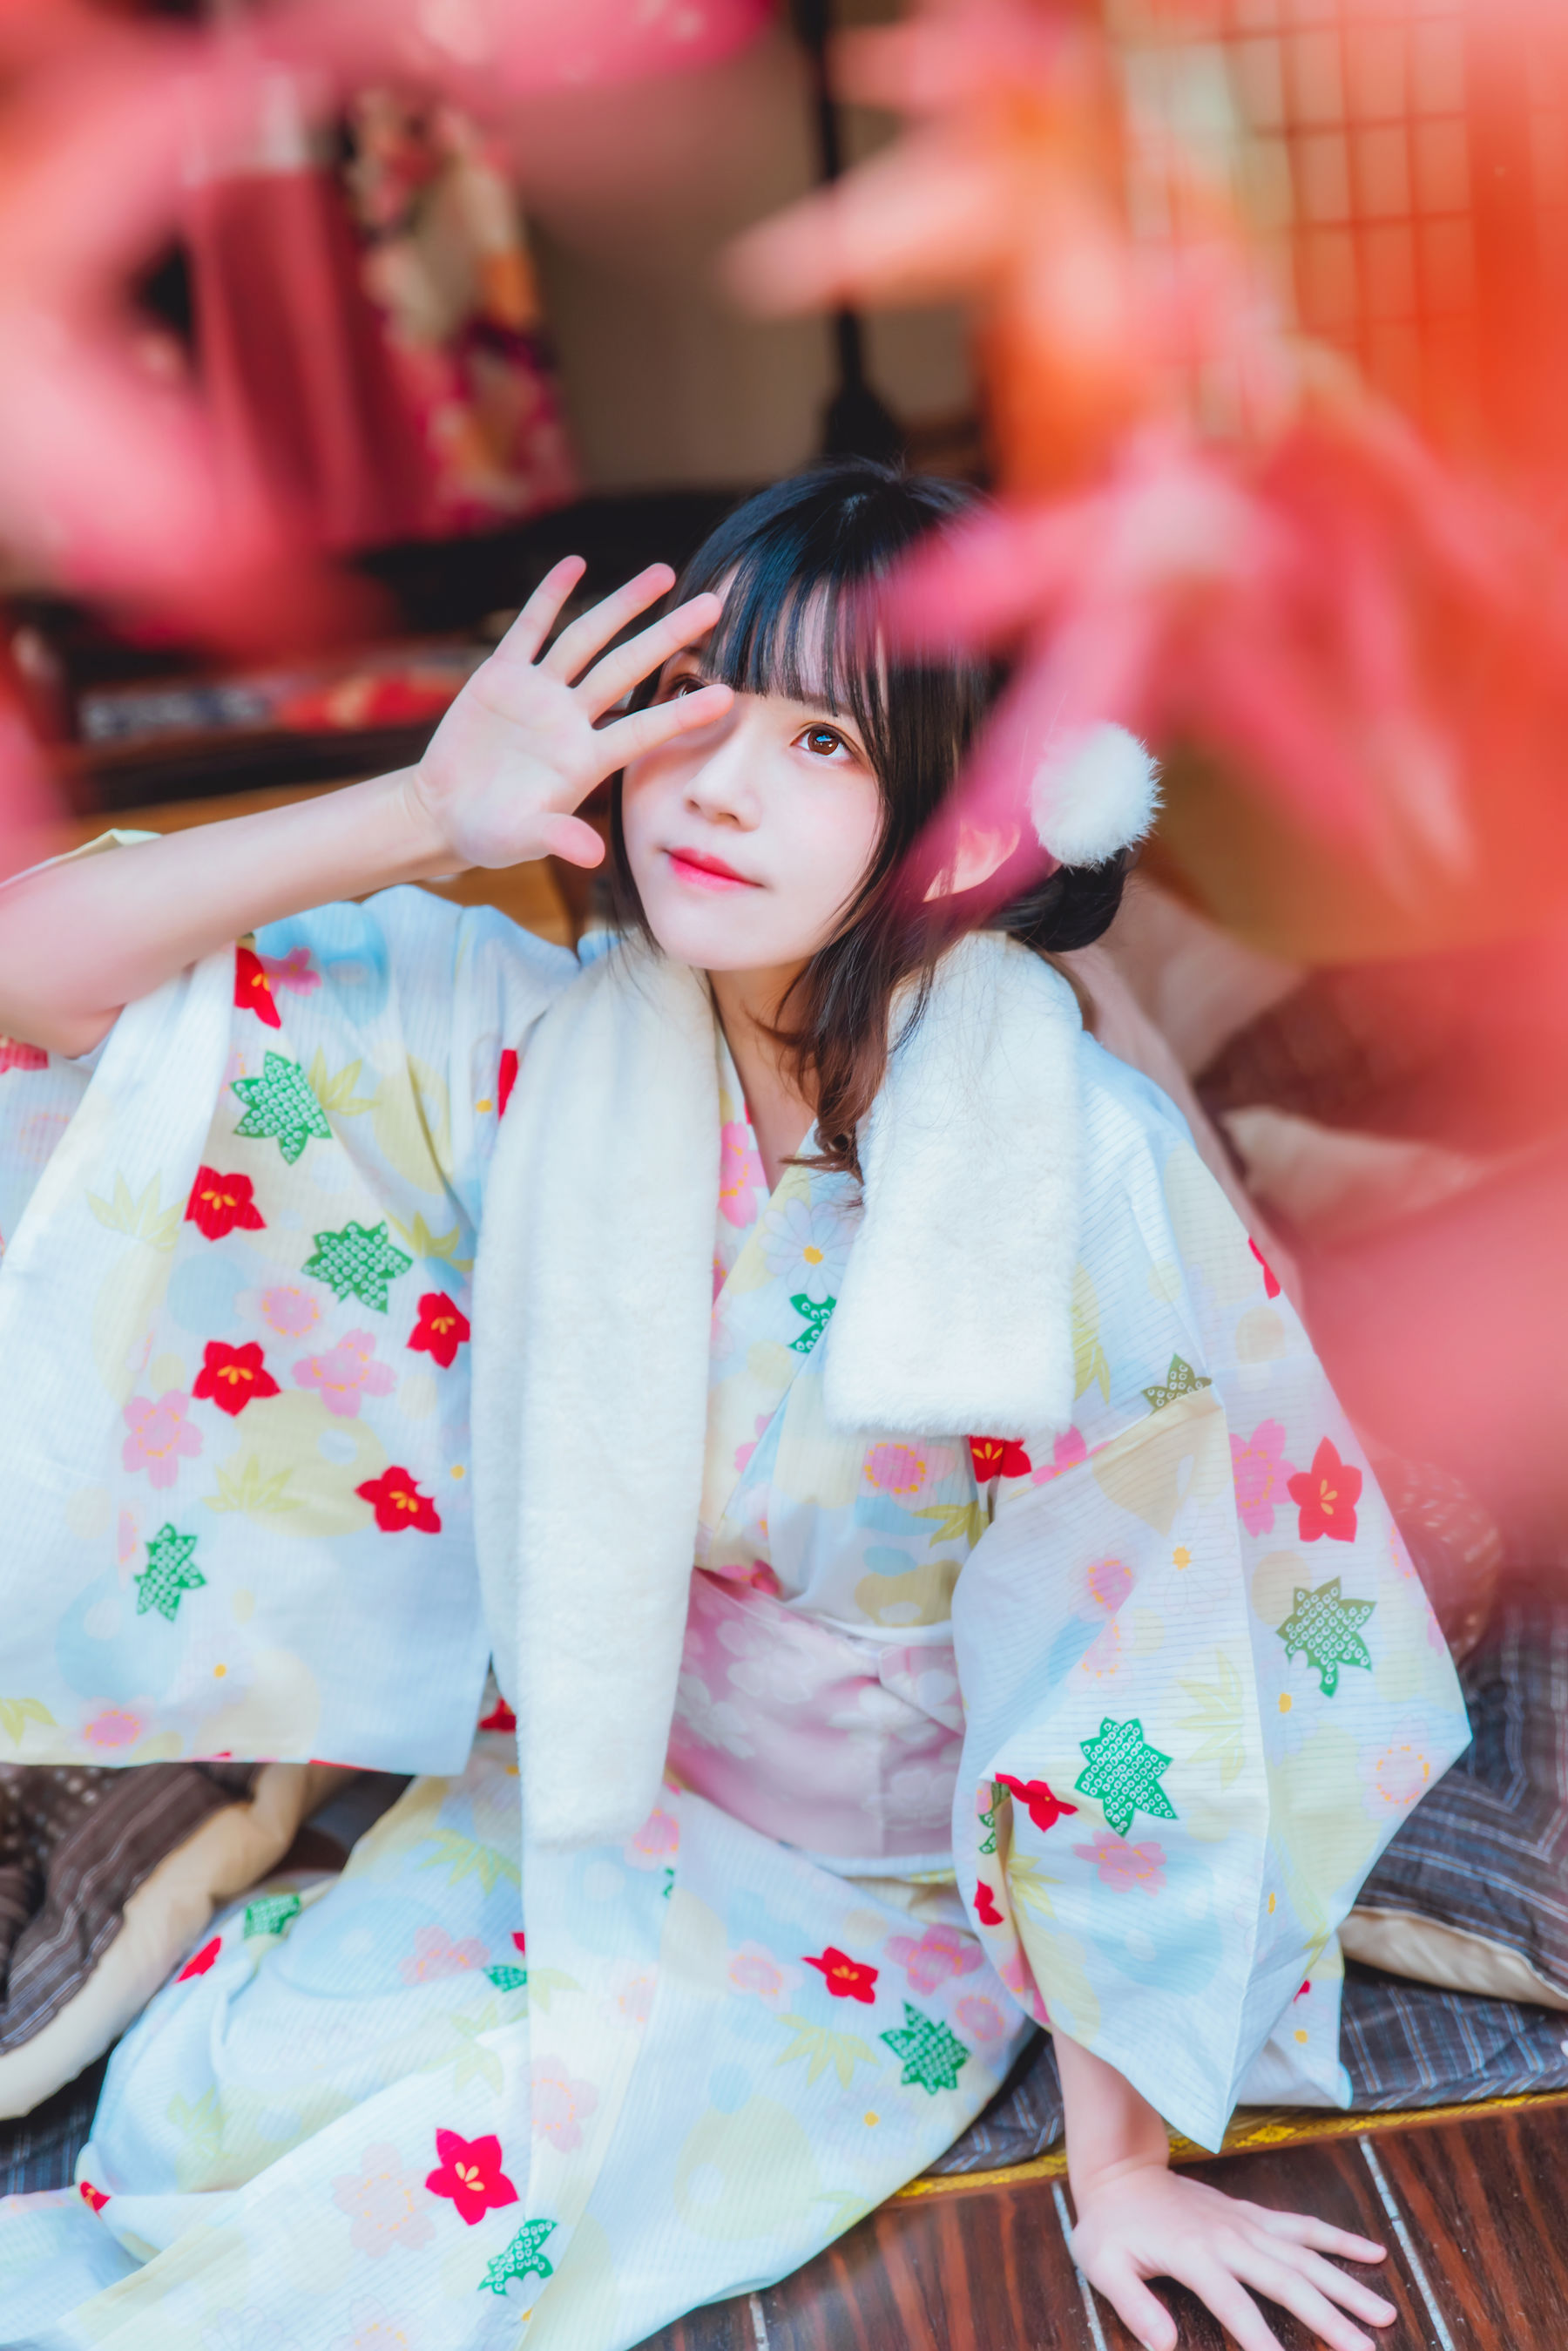 [糖] Vol.234 “kimono girl” photo set